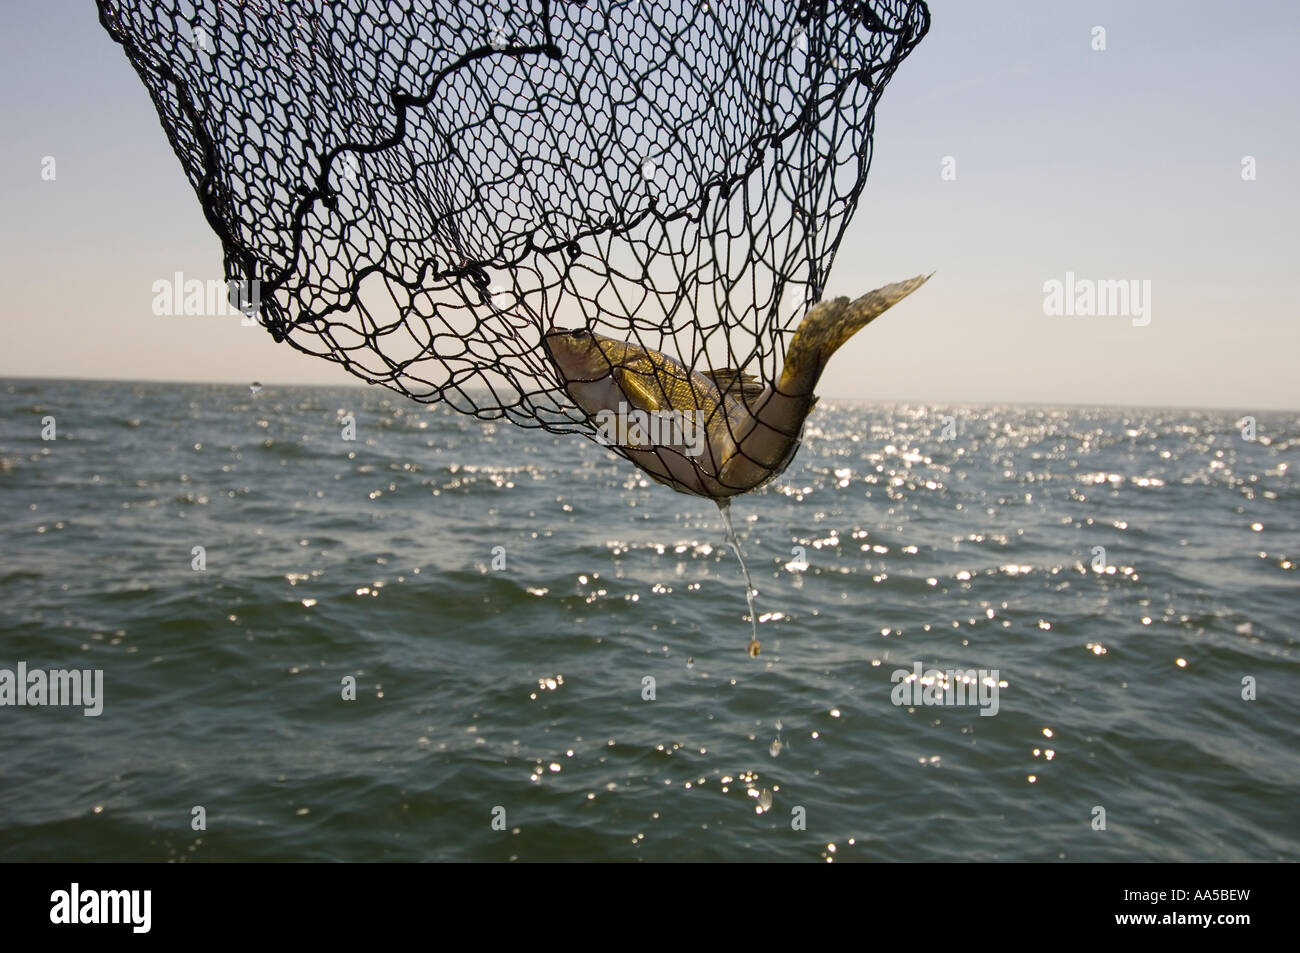 https://c8.alamy.com/comp/AA5BEW/a-walleye-in-a-fishing-net-hangs-over-the-horizon-of-lake-mille-lacs-AA5BEW.jpg